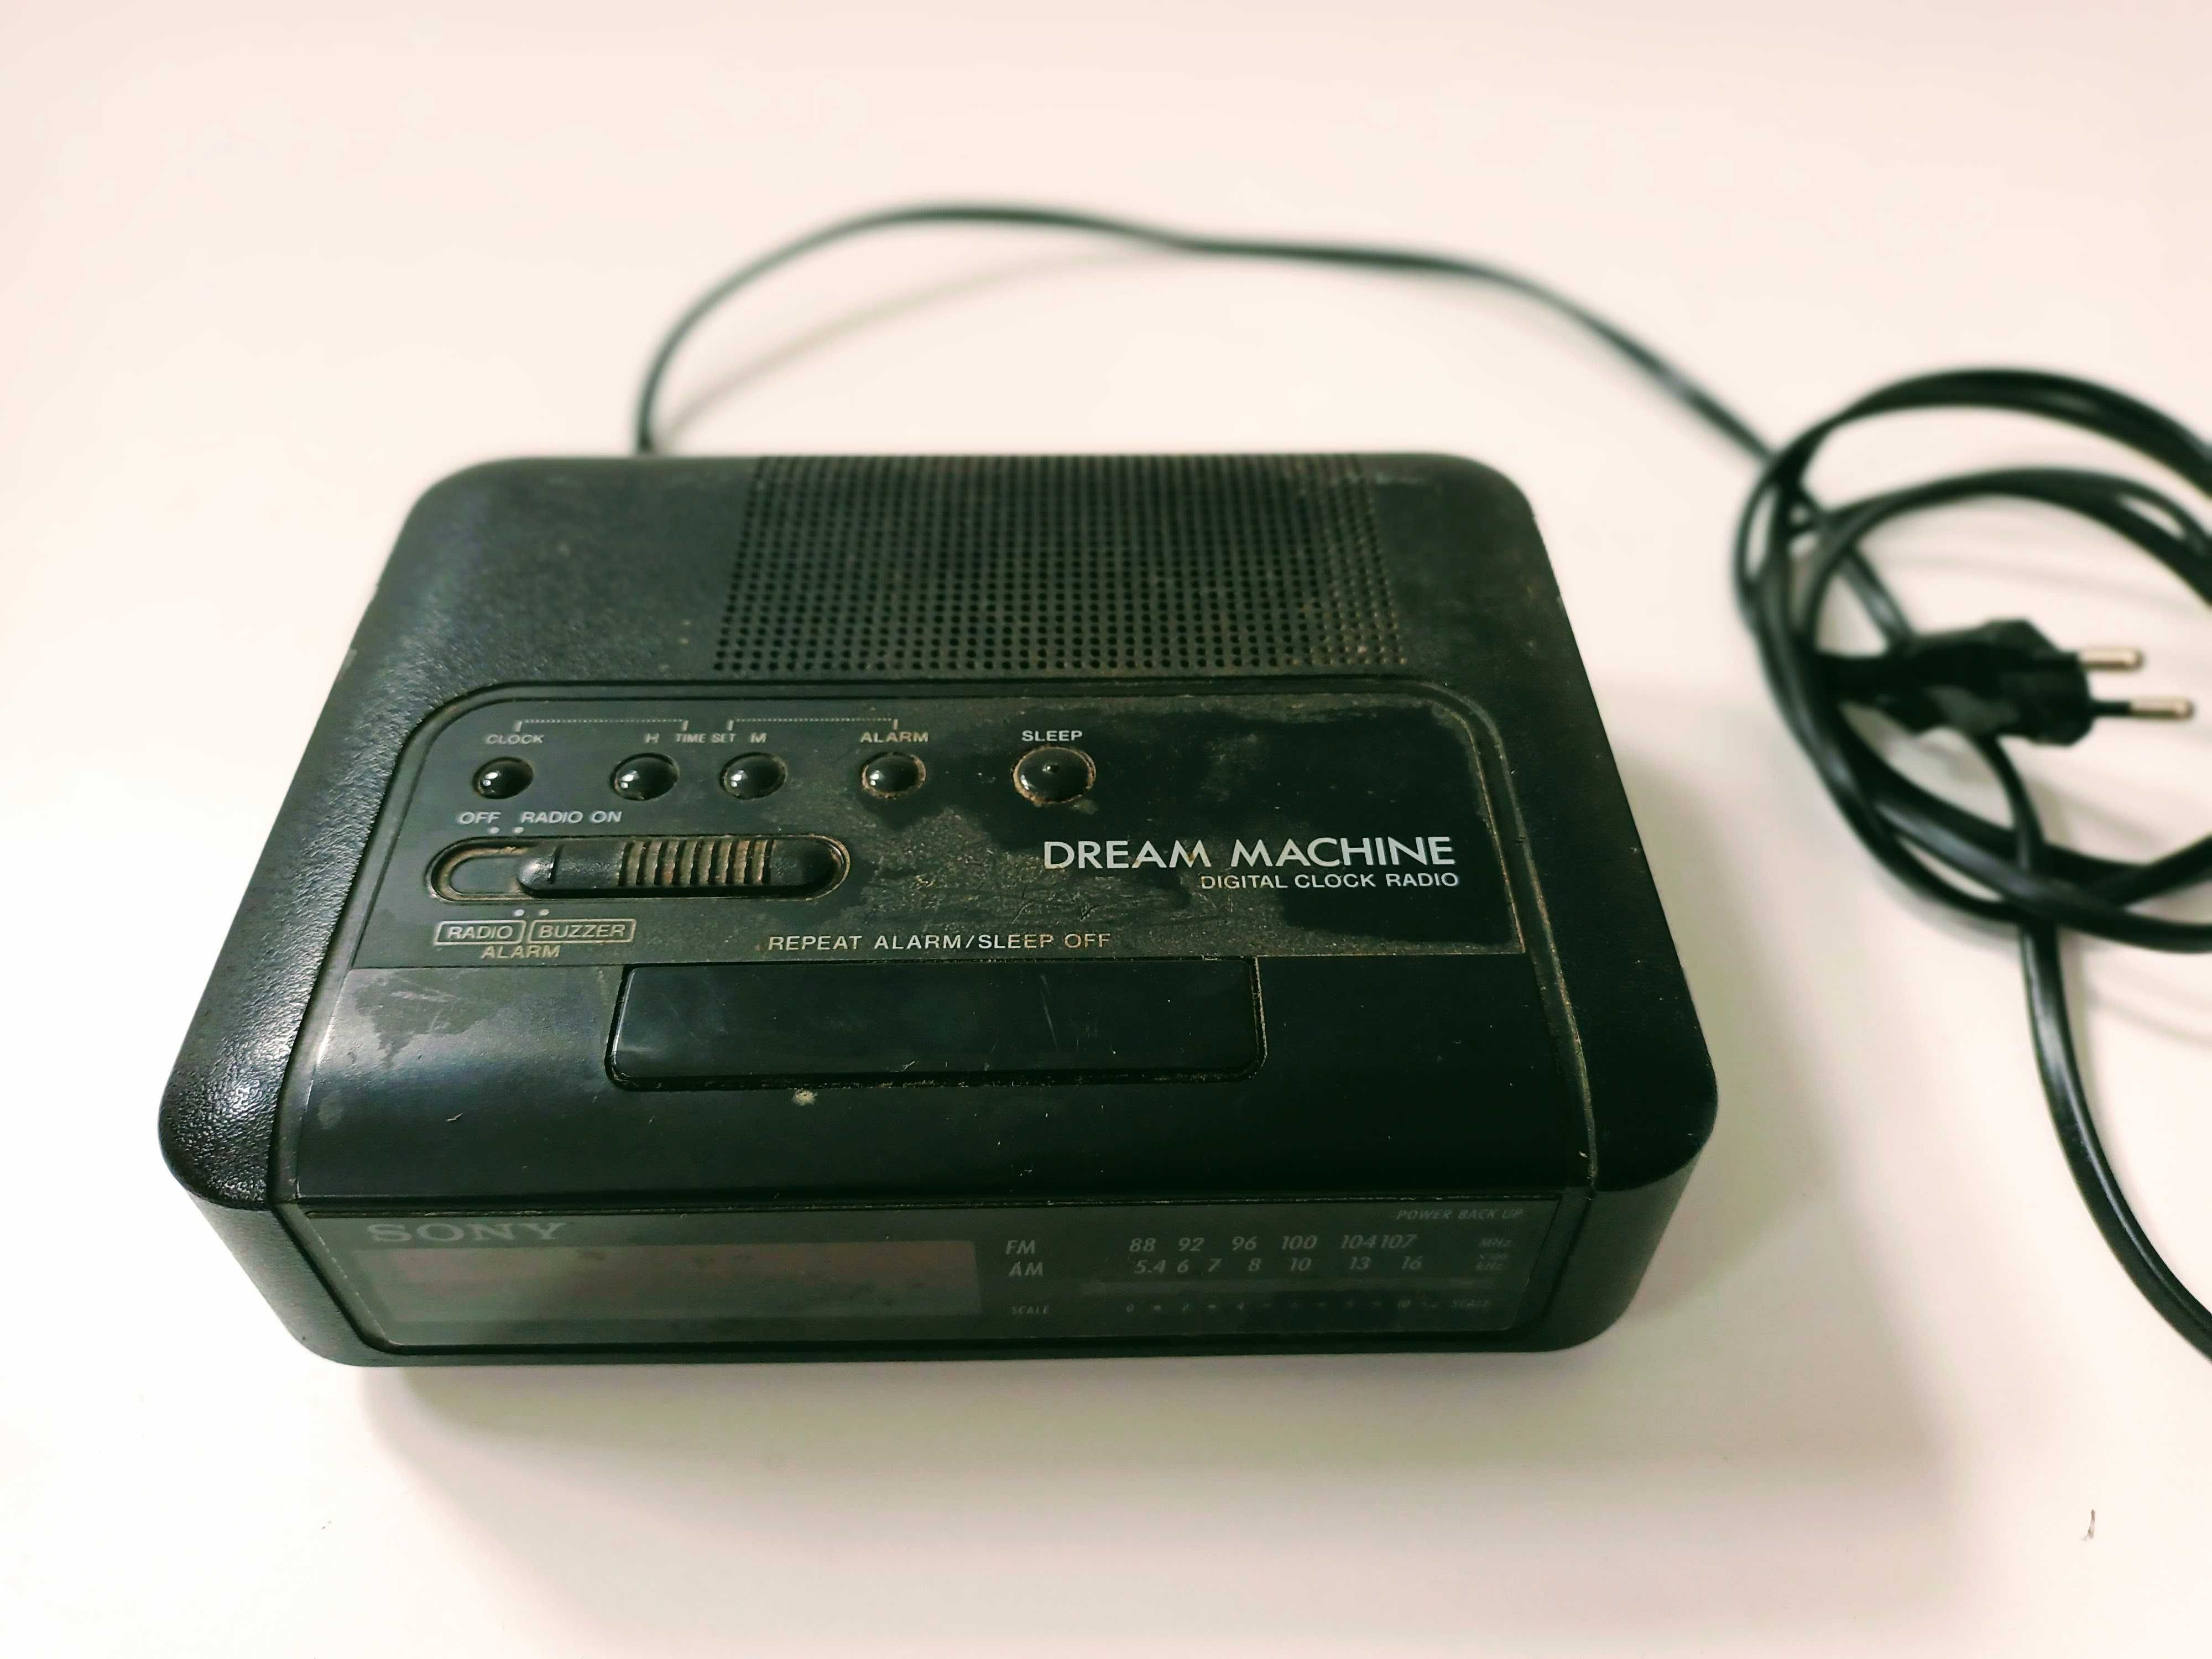 RADIO RELÓGIO - Despertador - "DREAM MACHINE", vintage, a funcionar.